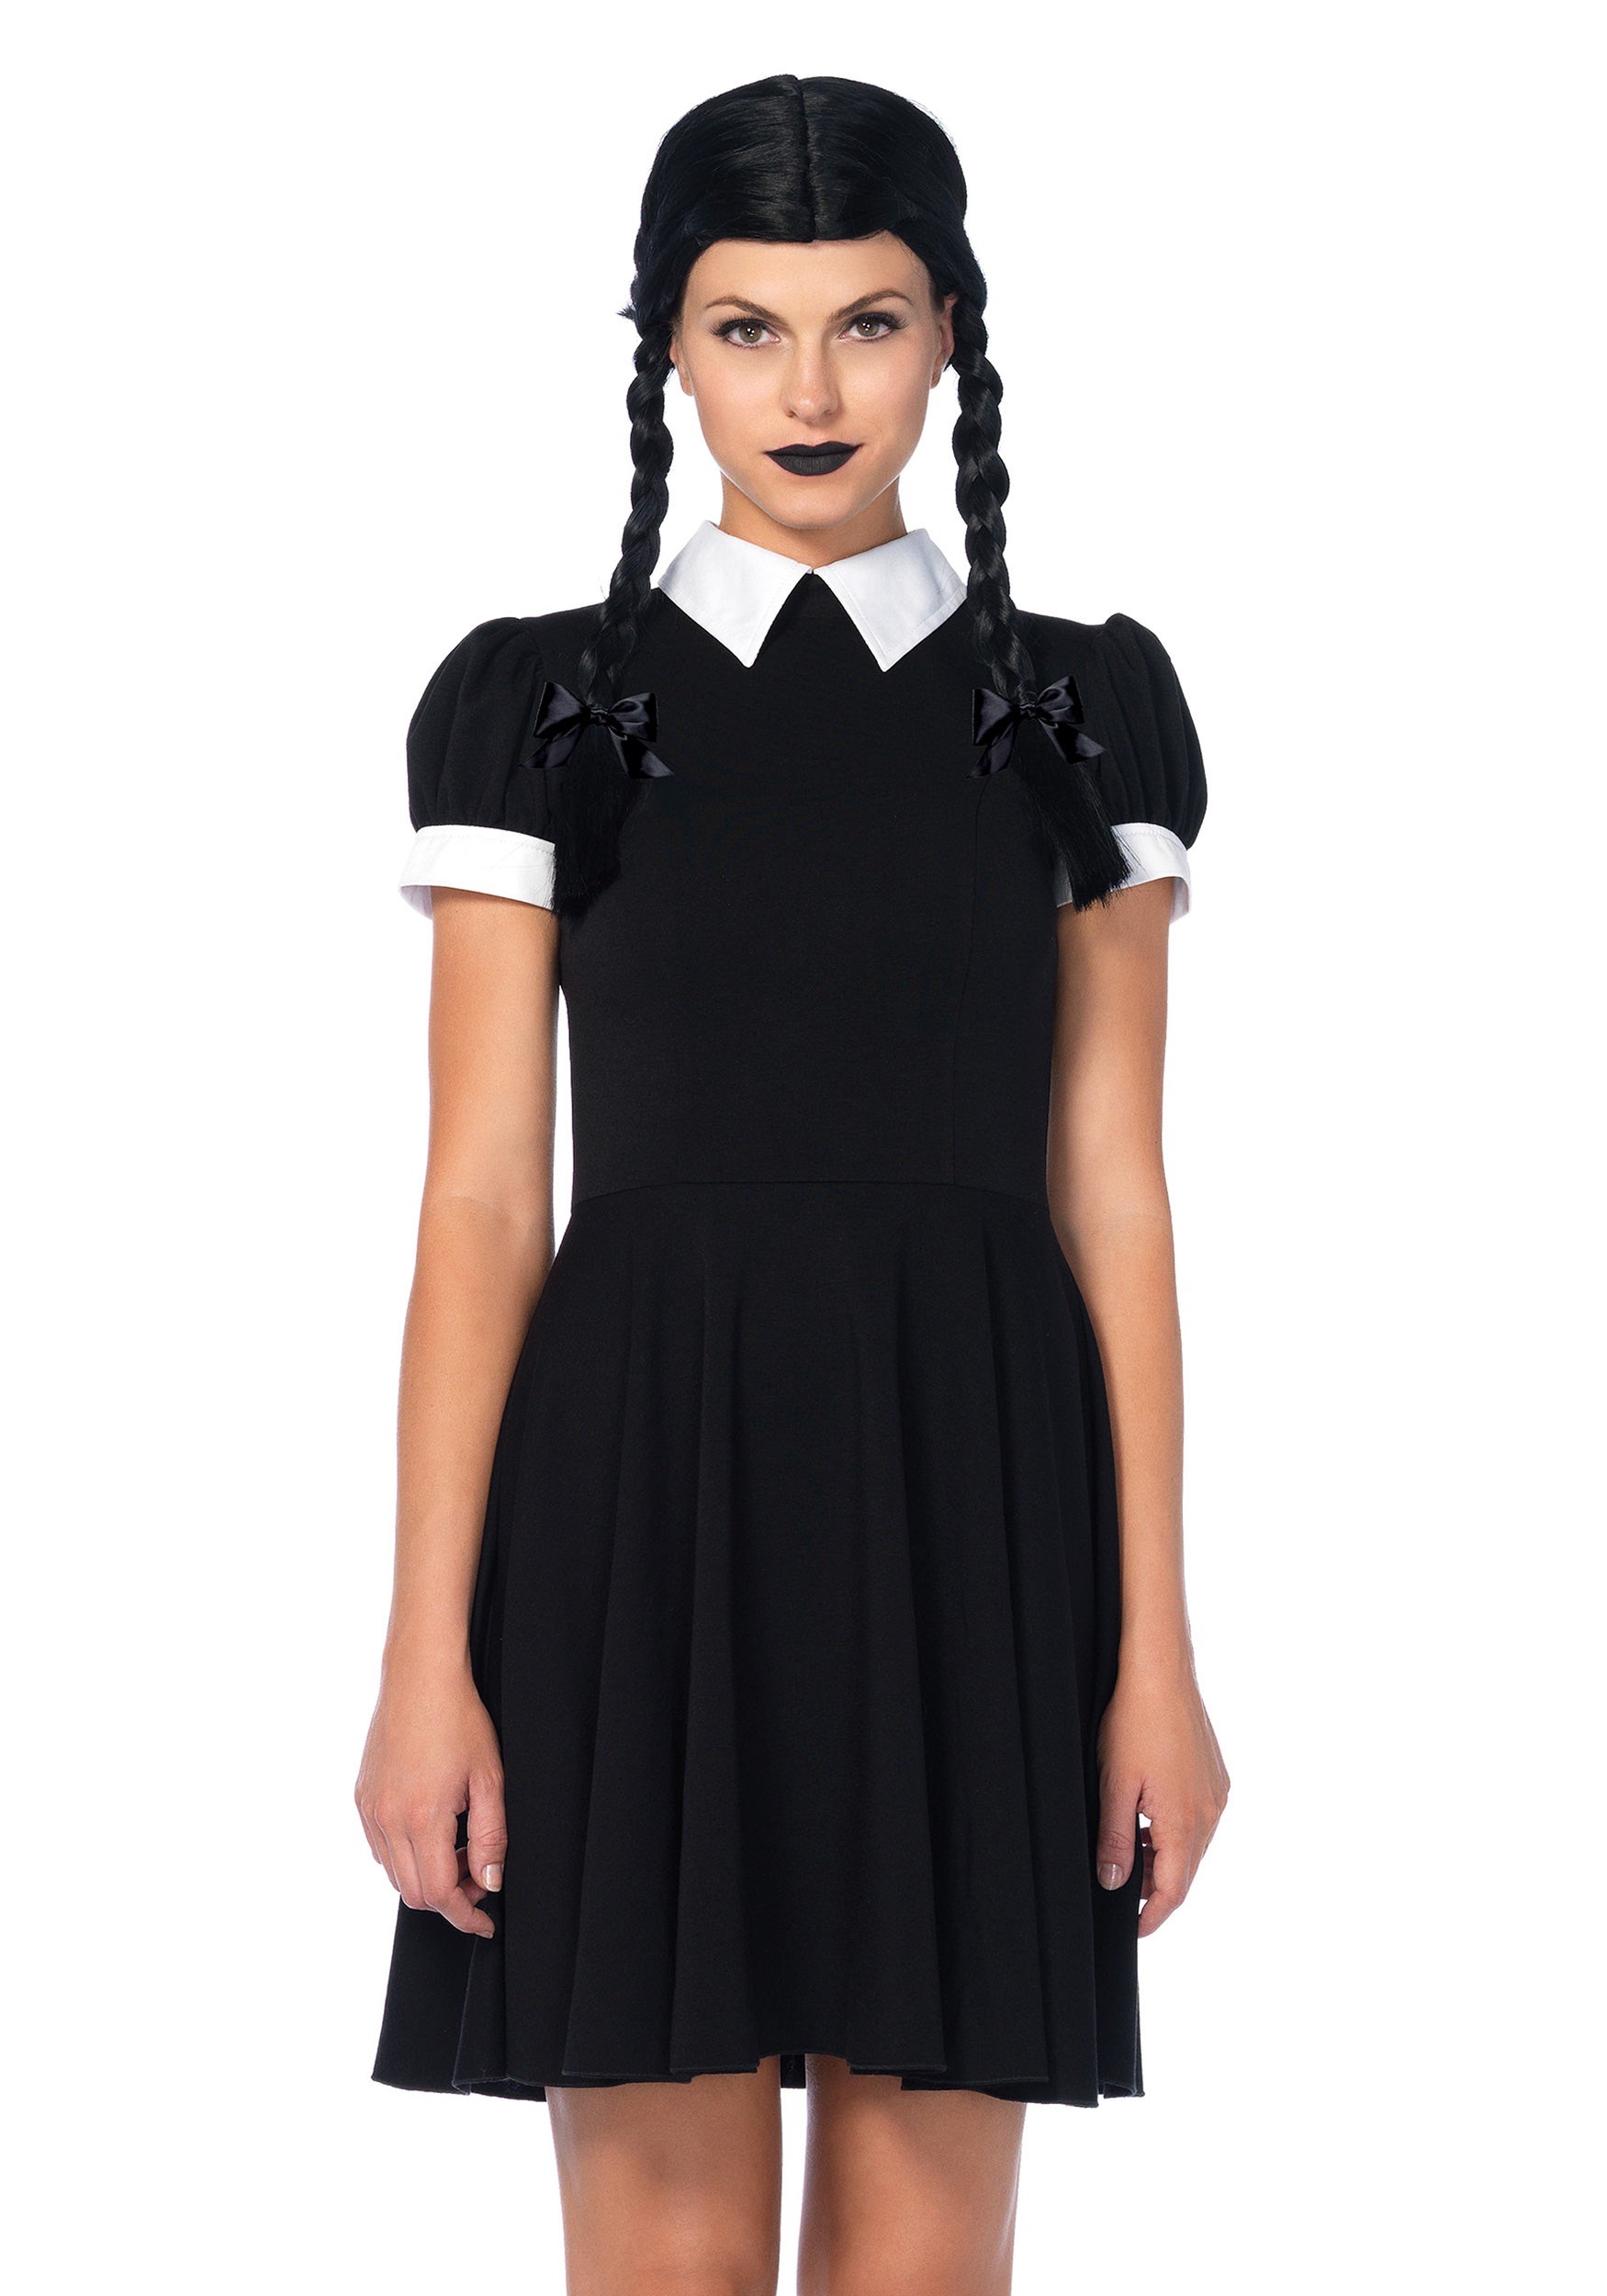 Gothic Darling Womens Costume